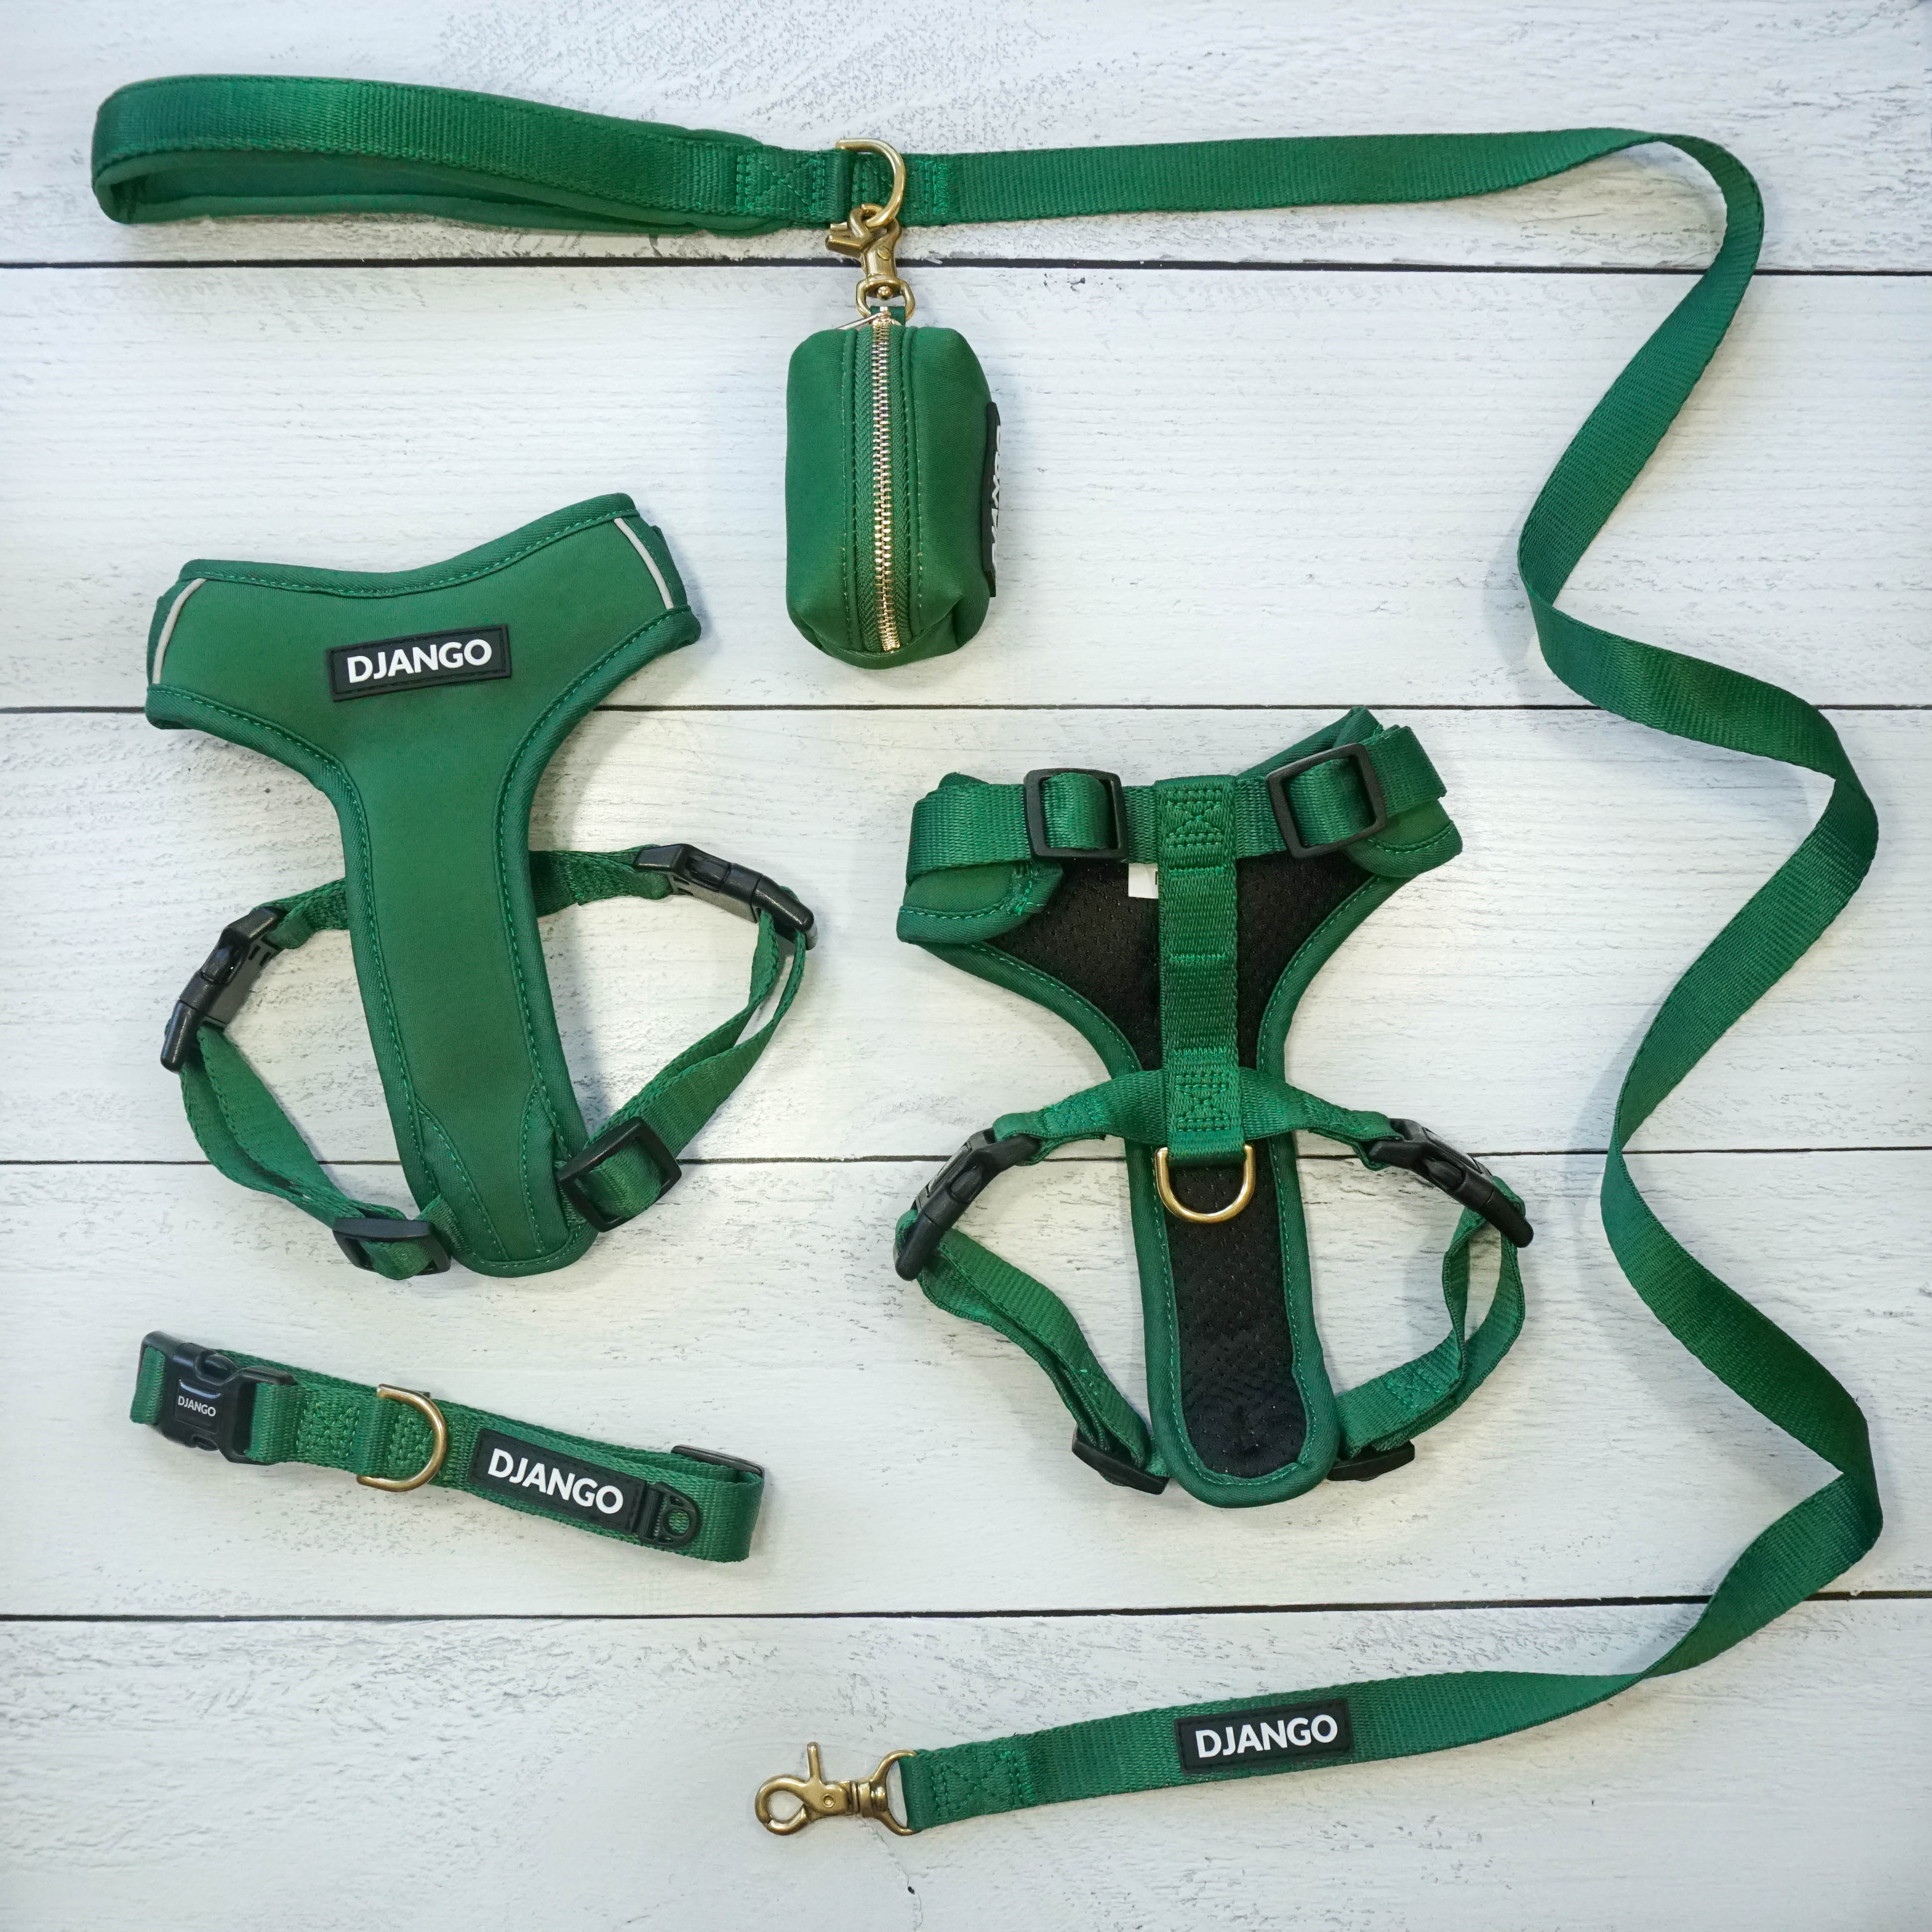 DJANGO Adventure Dog Harness, Collar, Leash, and Waste Bag Holder Collection in Color Forest Green - djangobrand.com